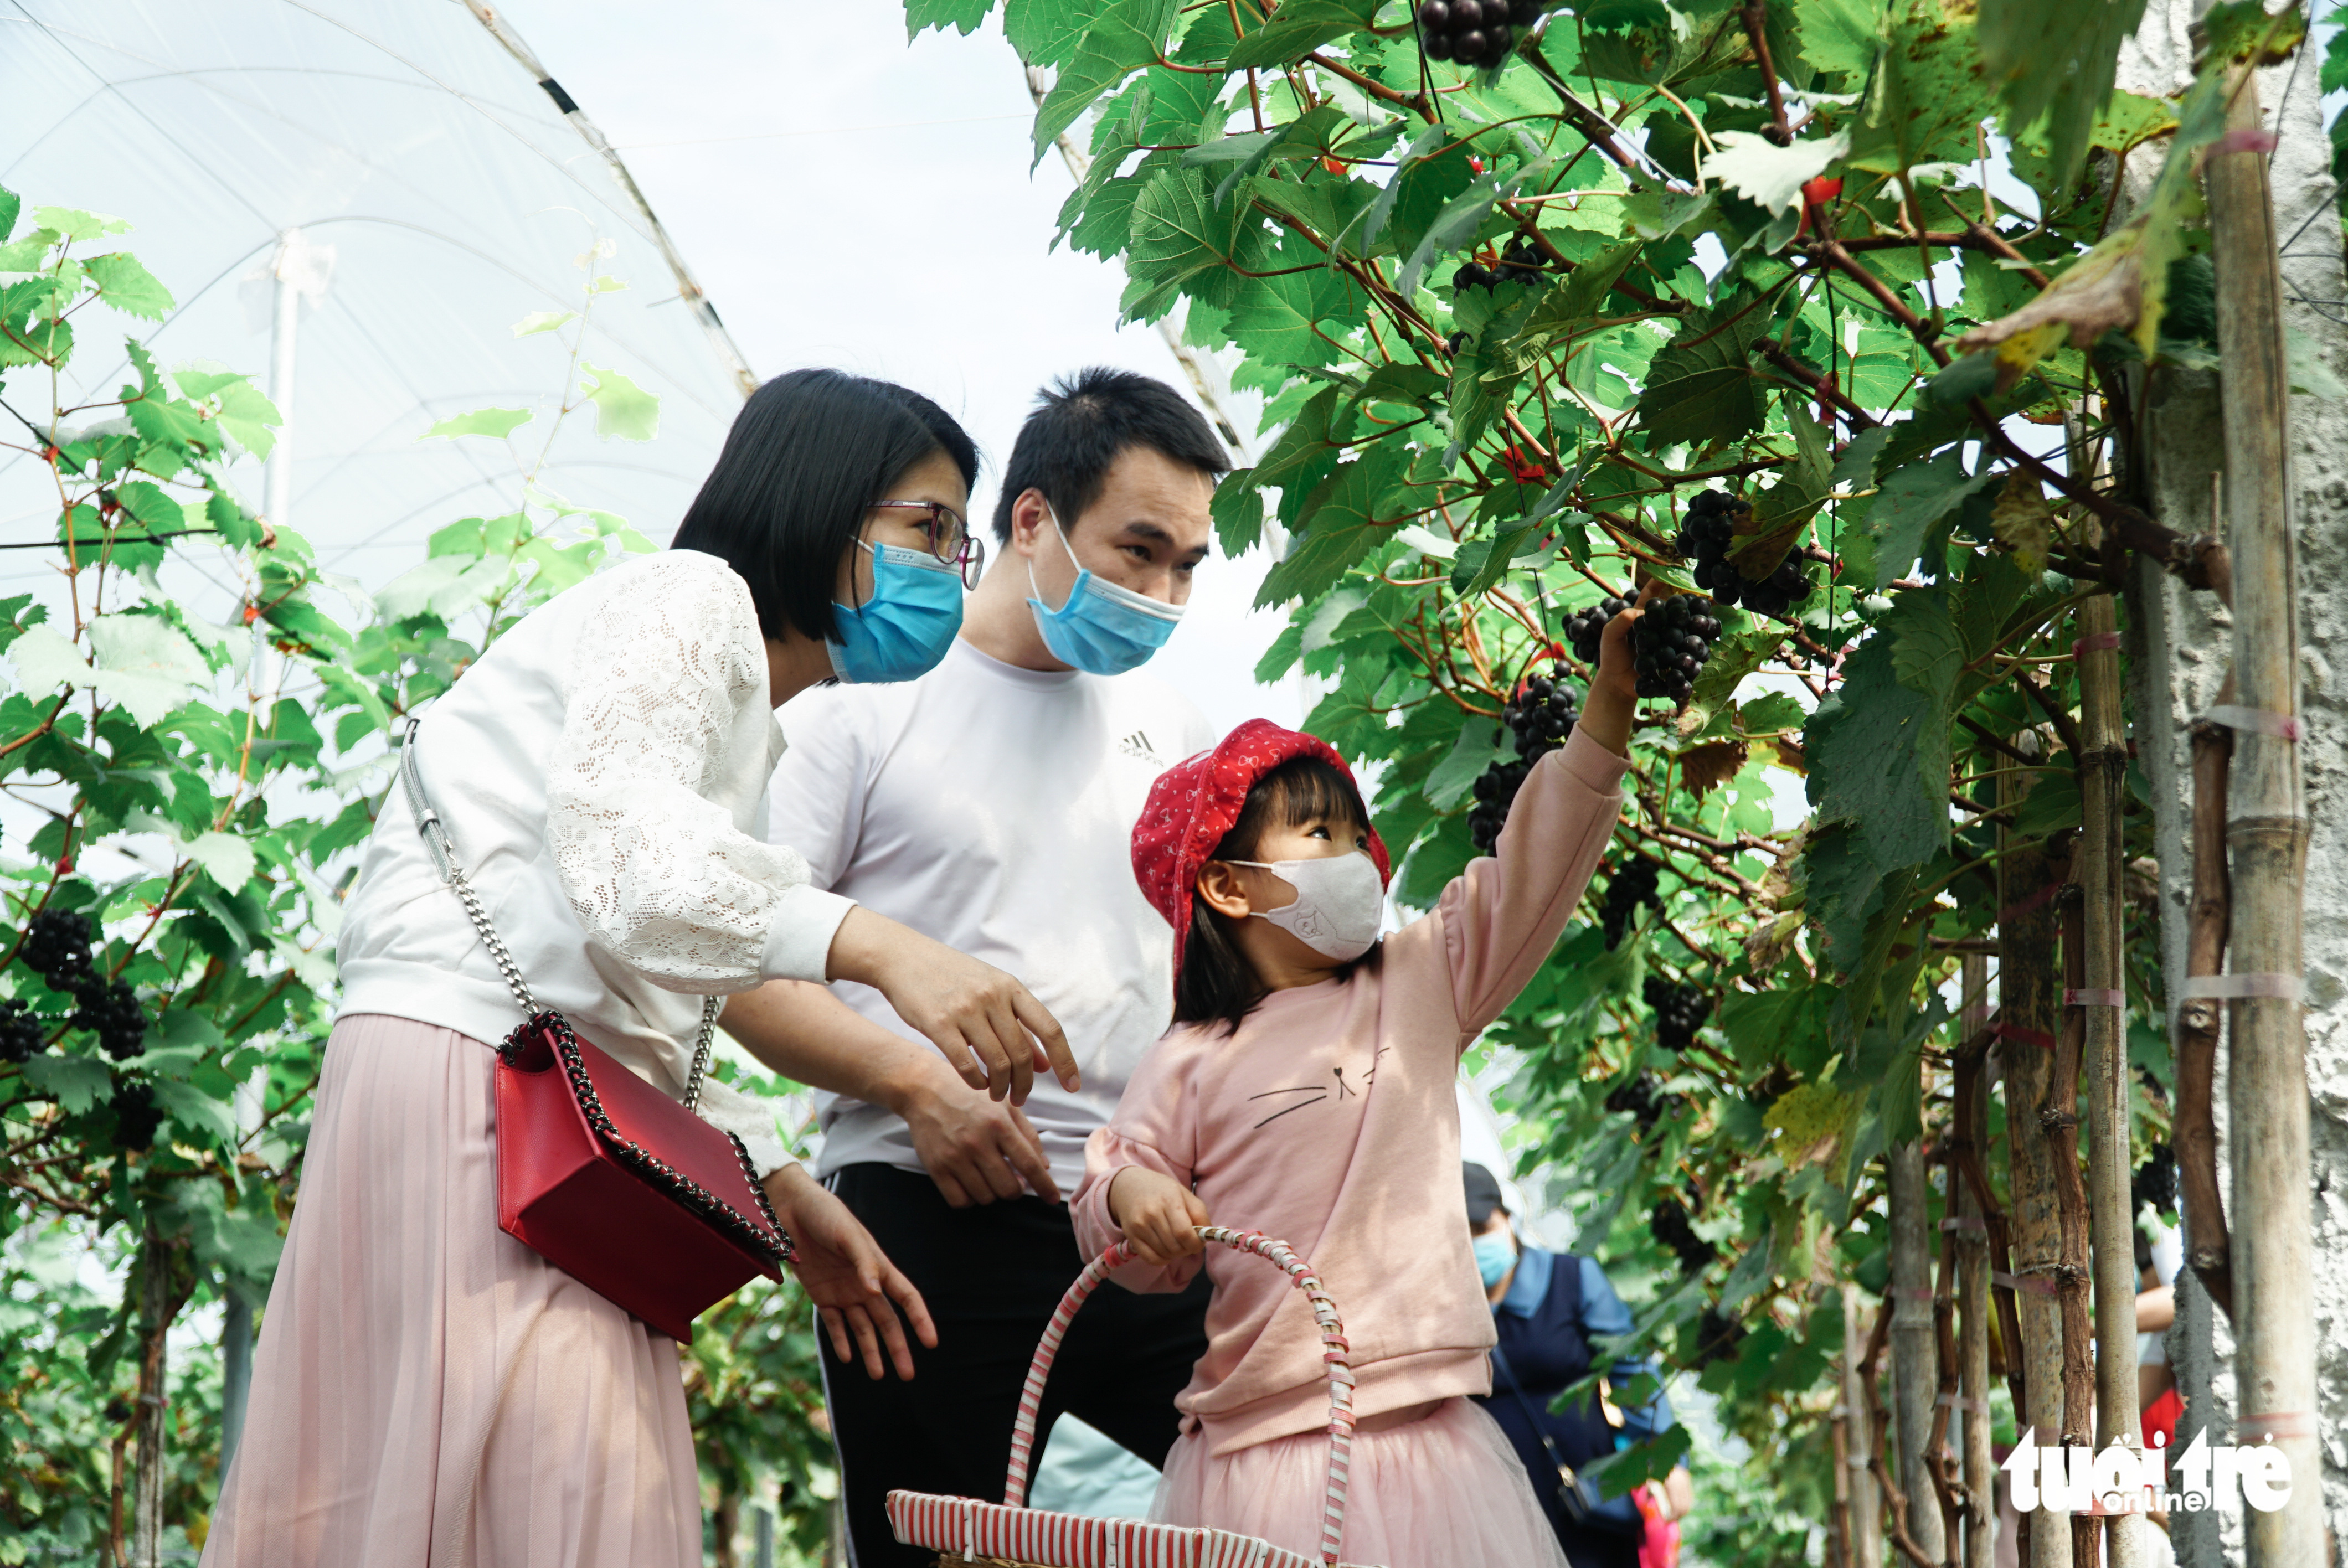 Hanoi residents get closer to nature at fruitful vineyard